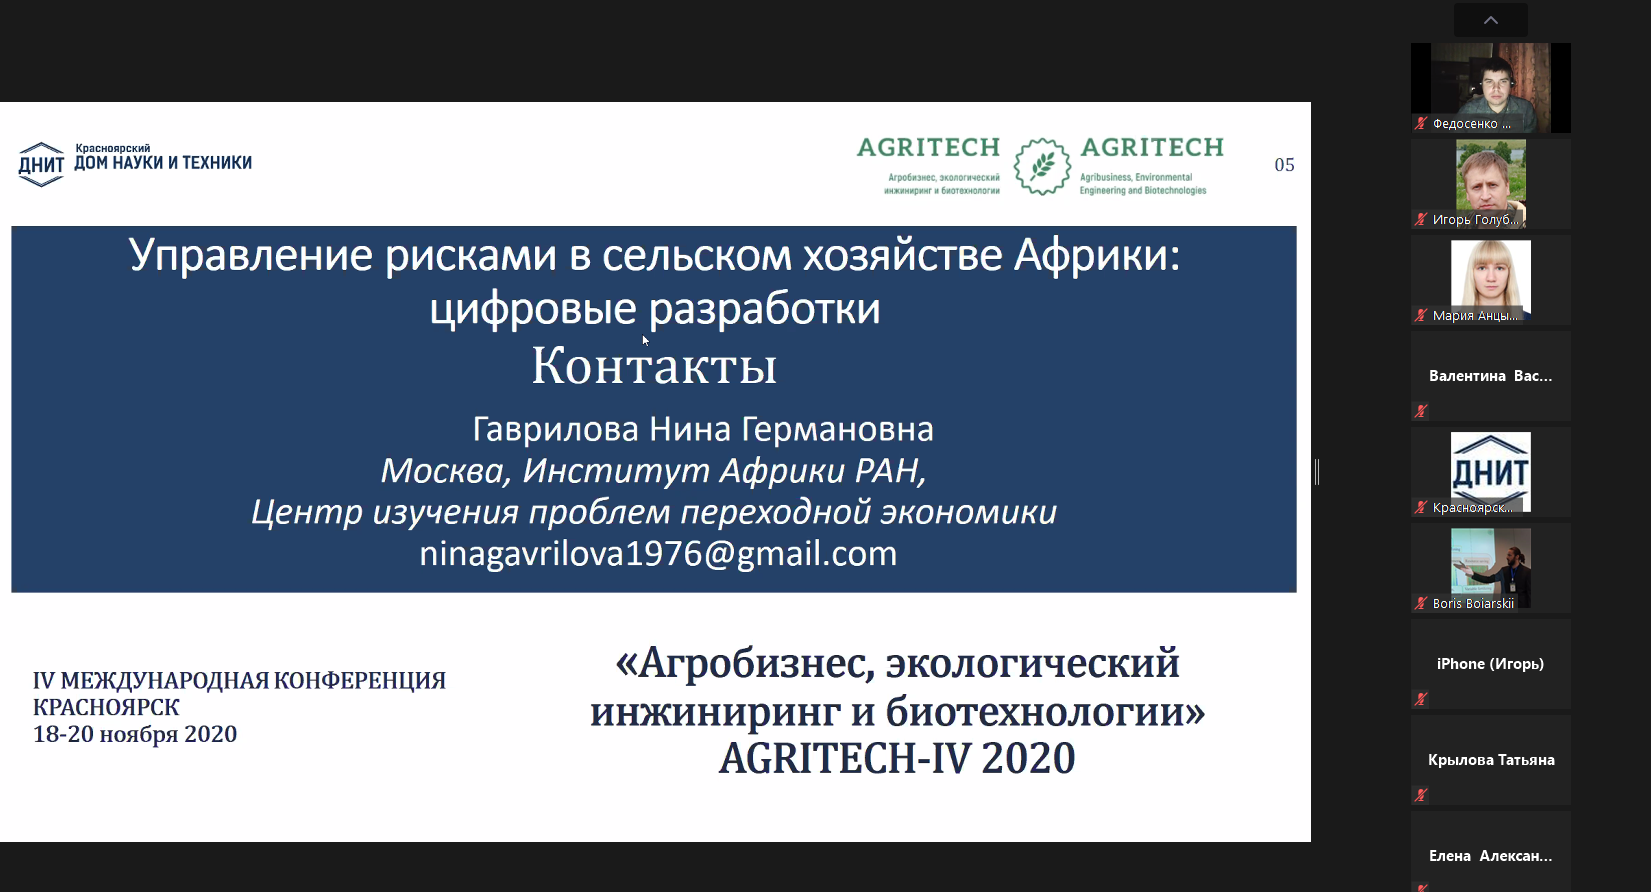 Agritech-IV 2020: online session